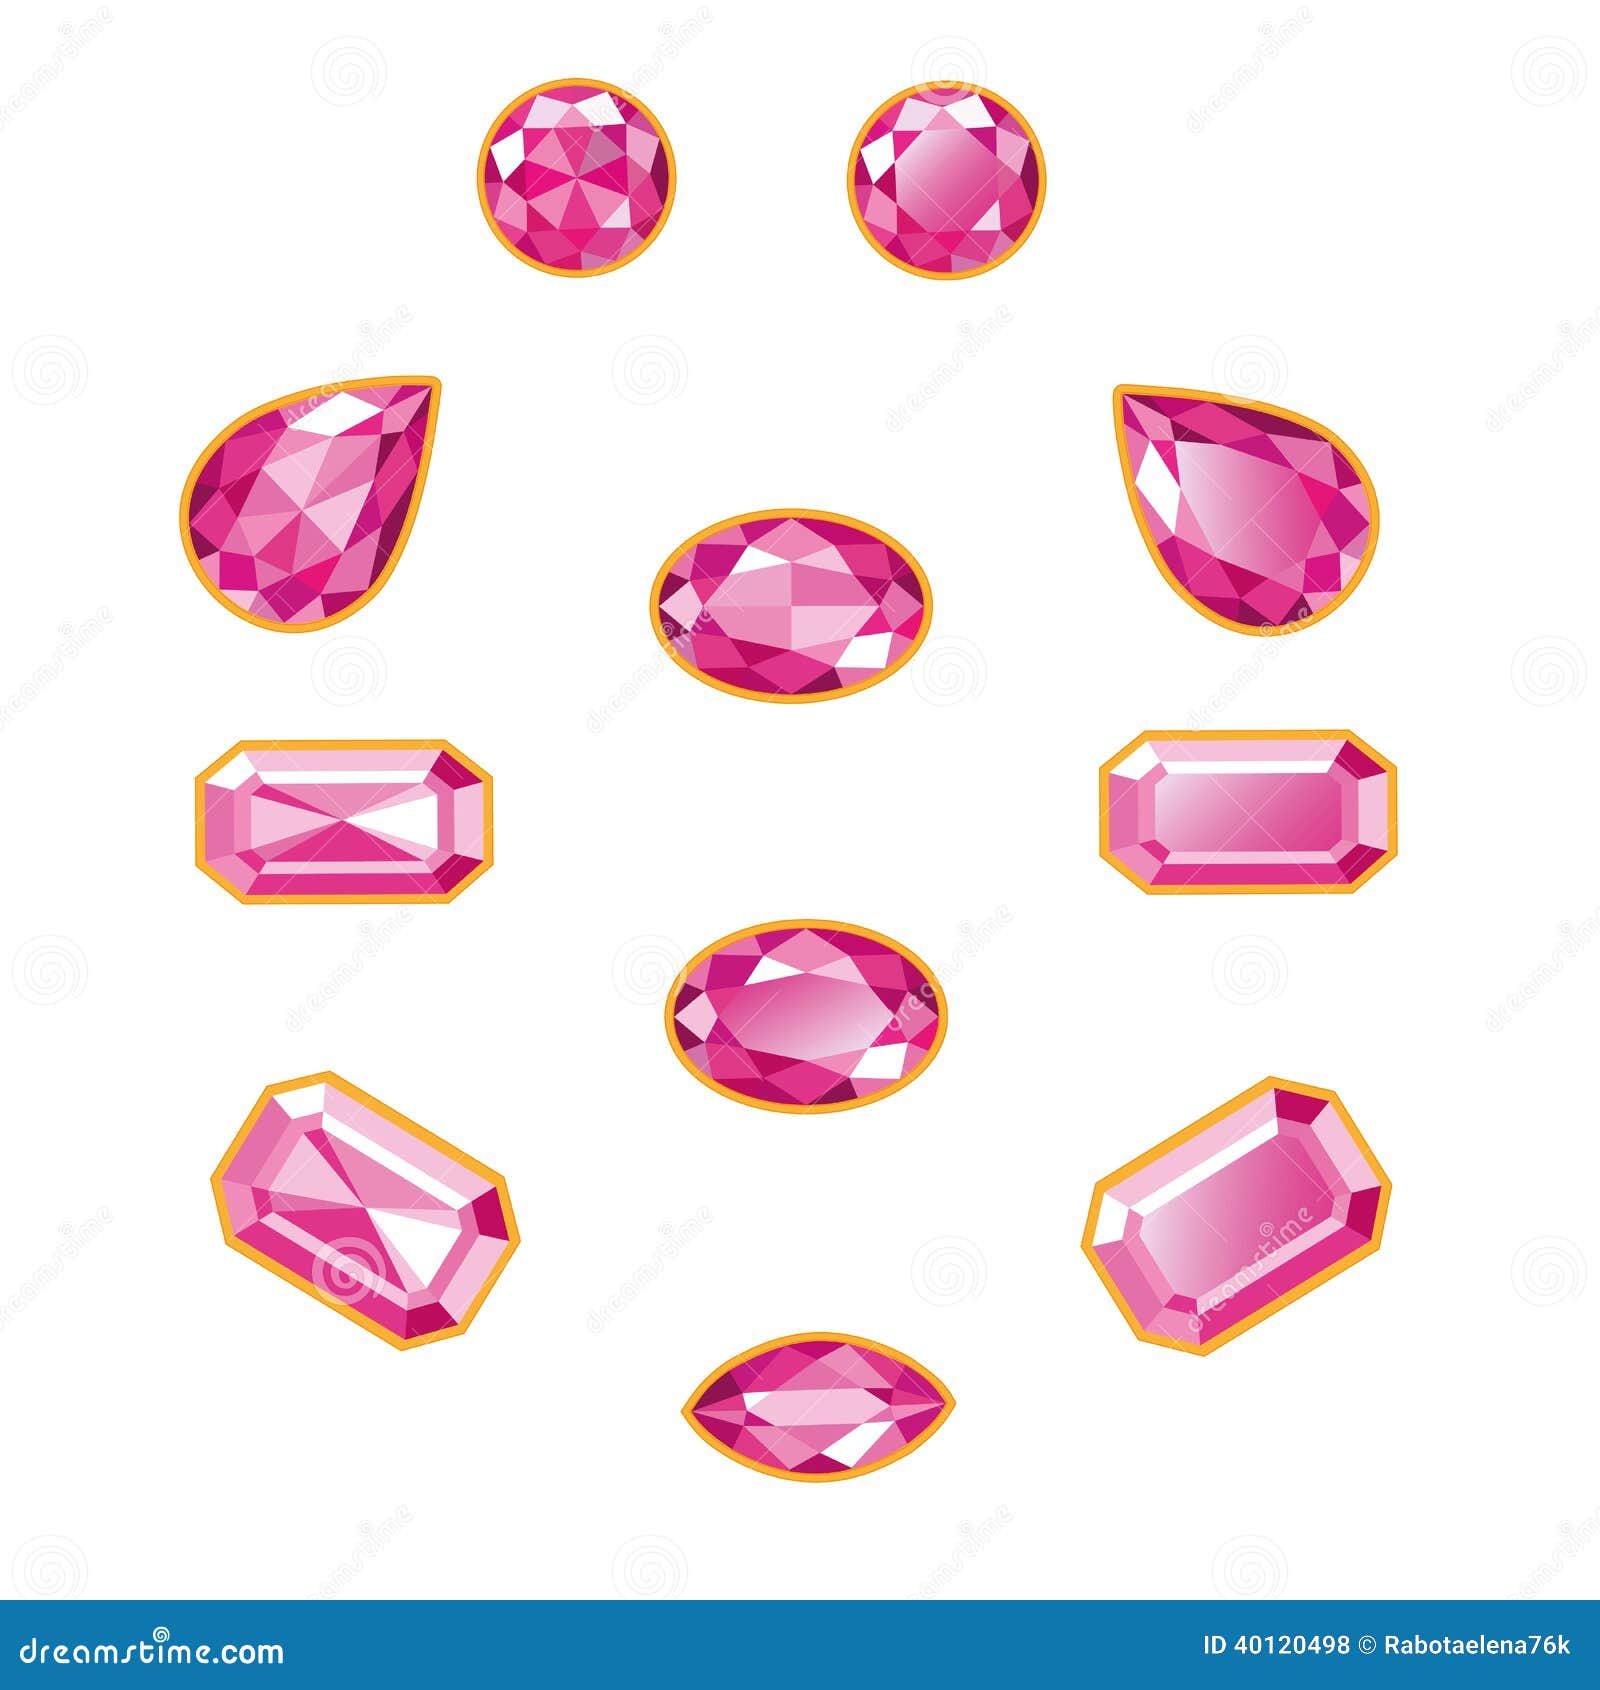 pink diamond clip art free - photo #19